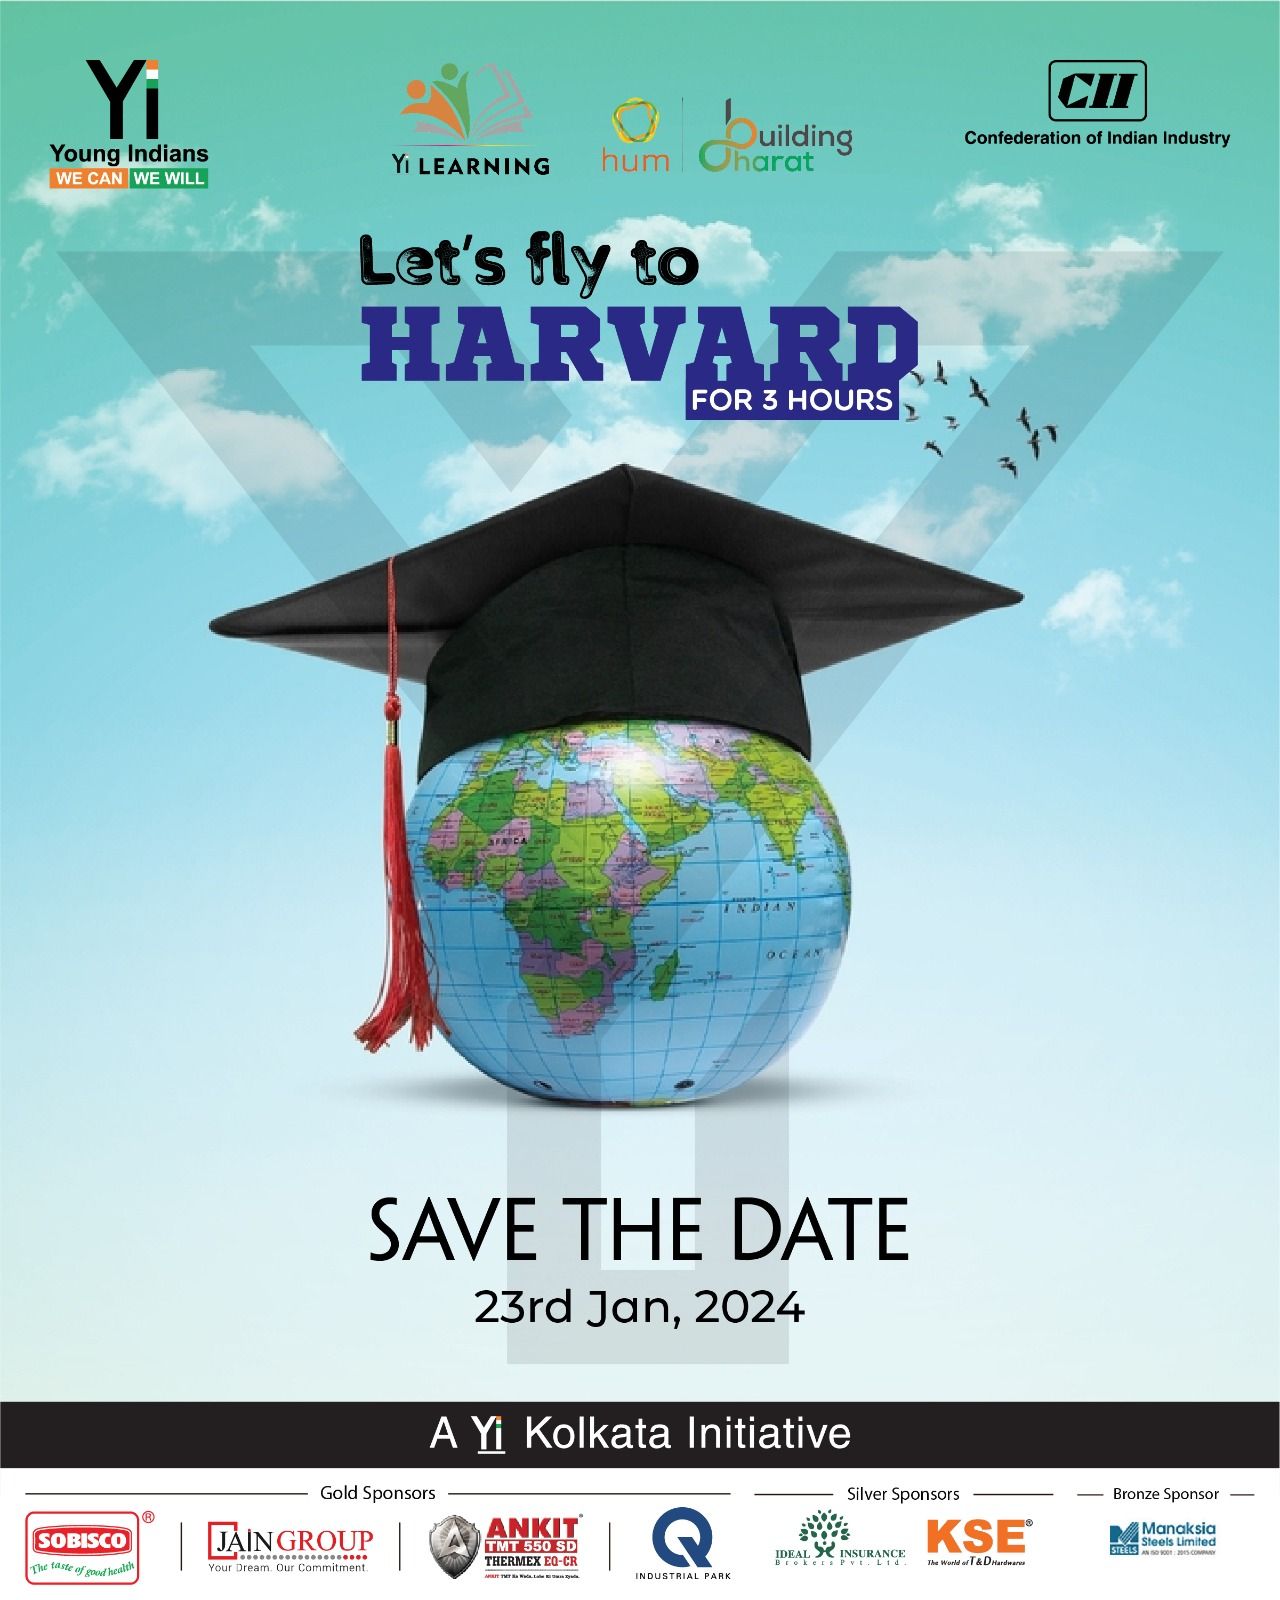 Yi24 | Learning, Membership - Let's Fly to Harvard